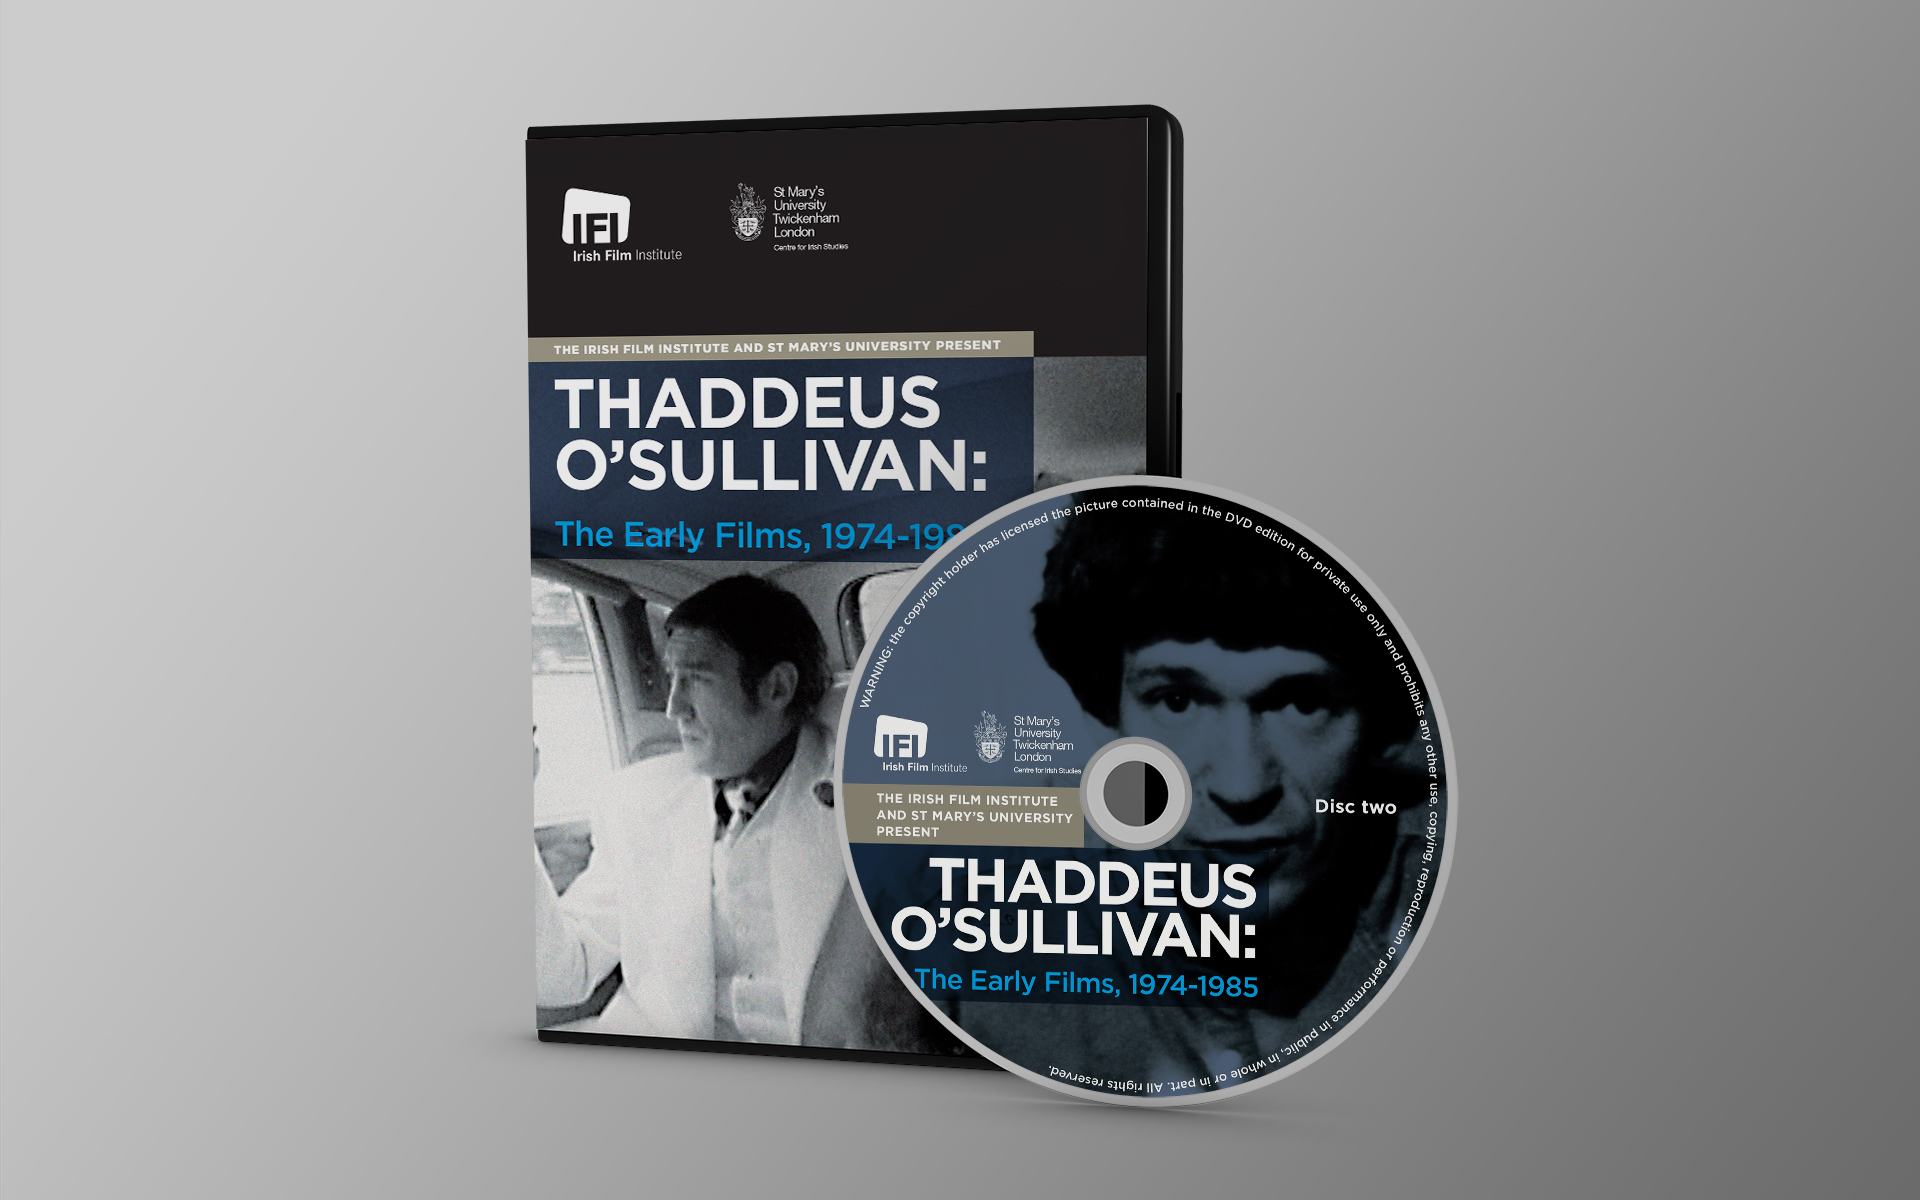 IFI Irish Film Archive Thaddeus O’Sullivan DVD package design